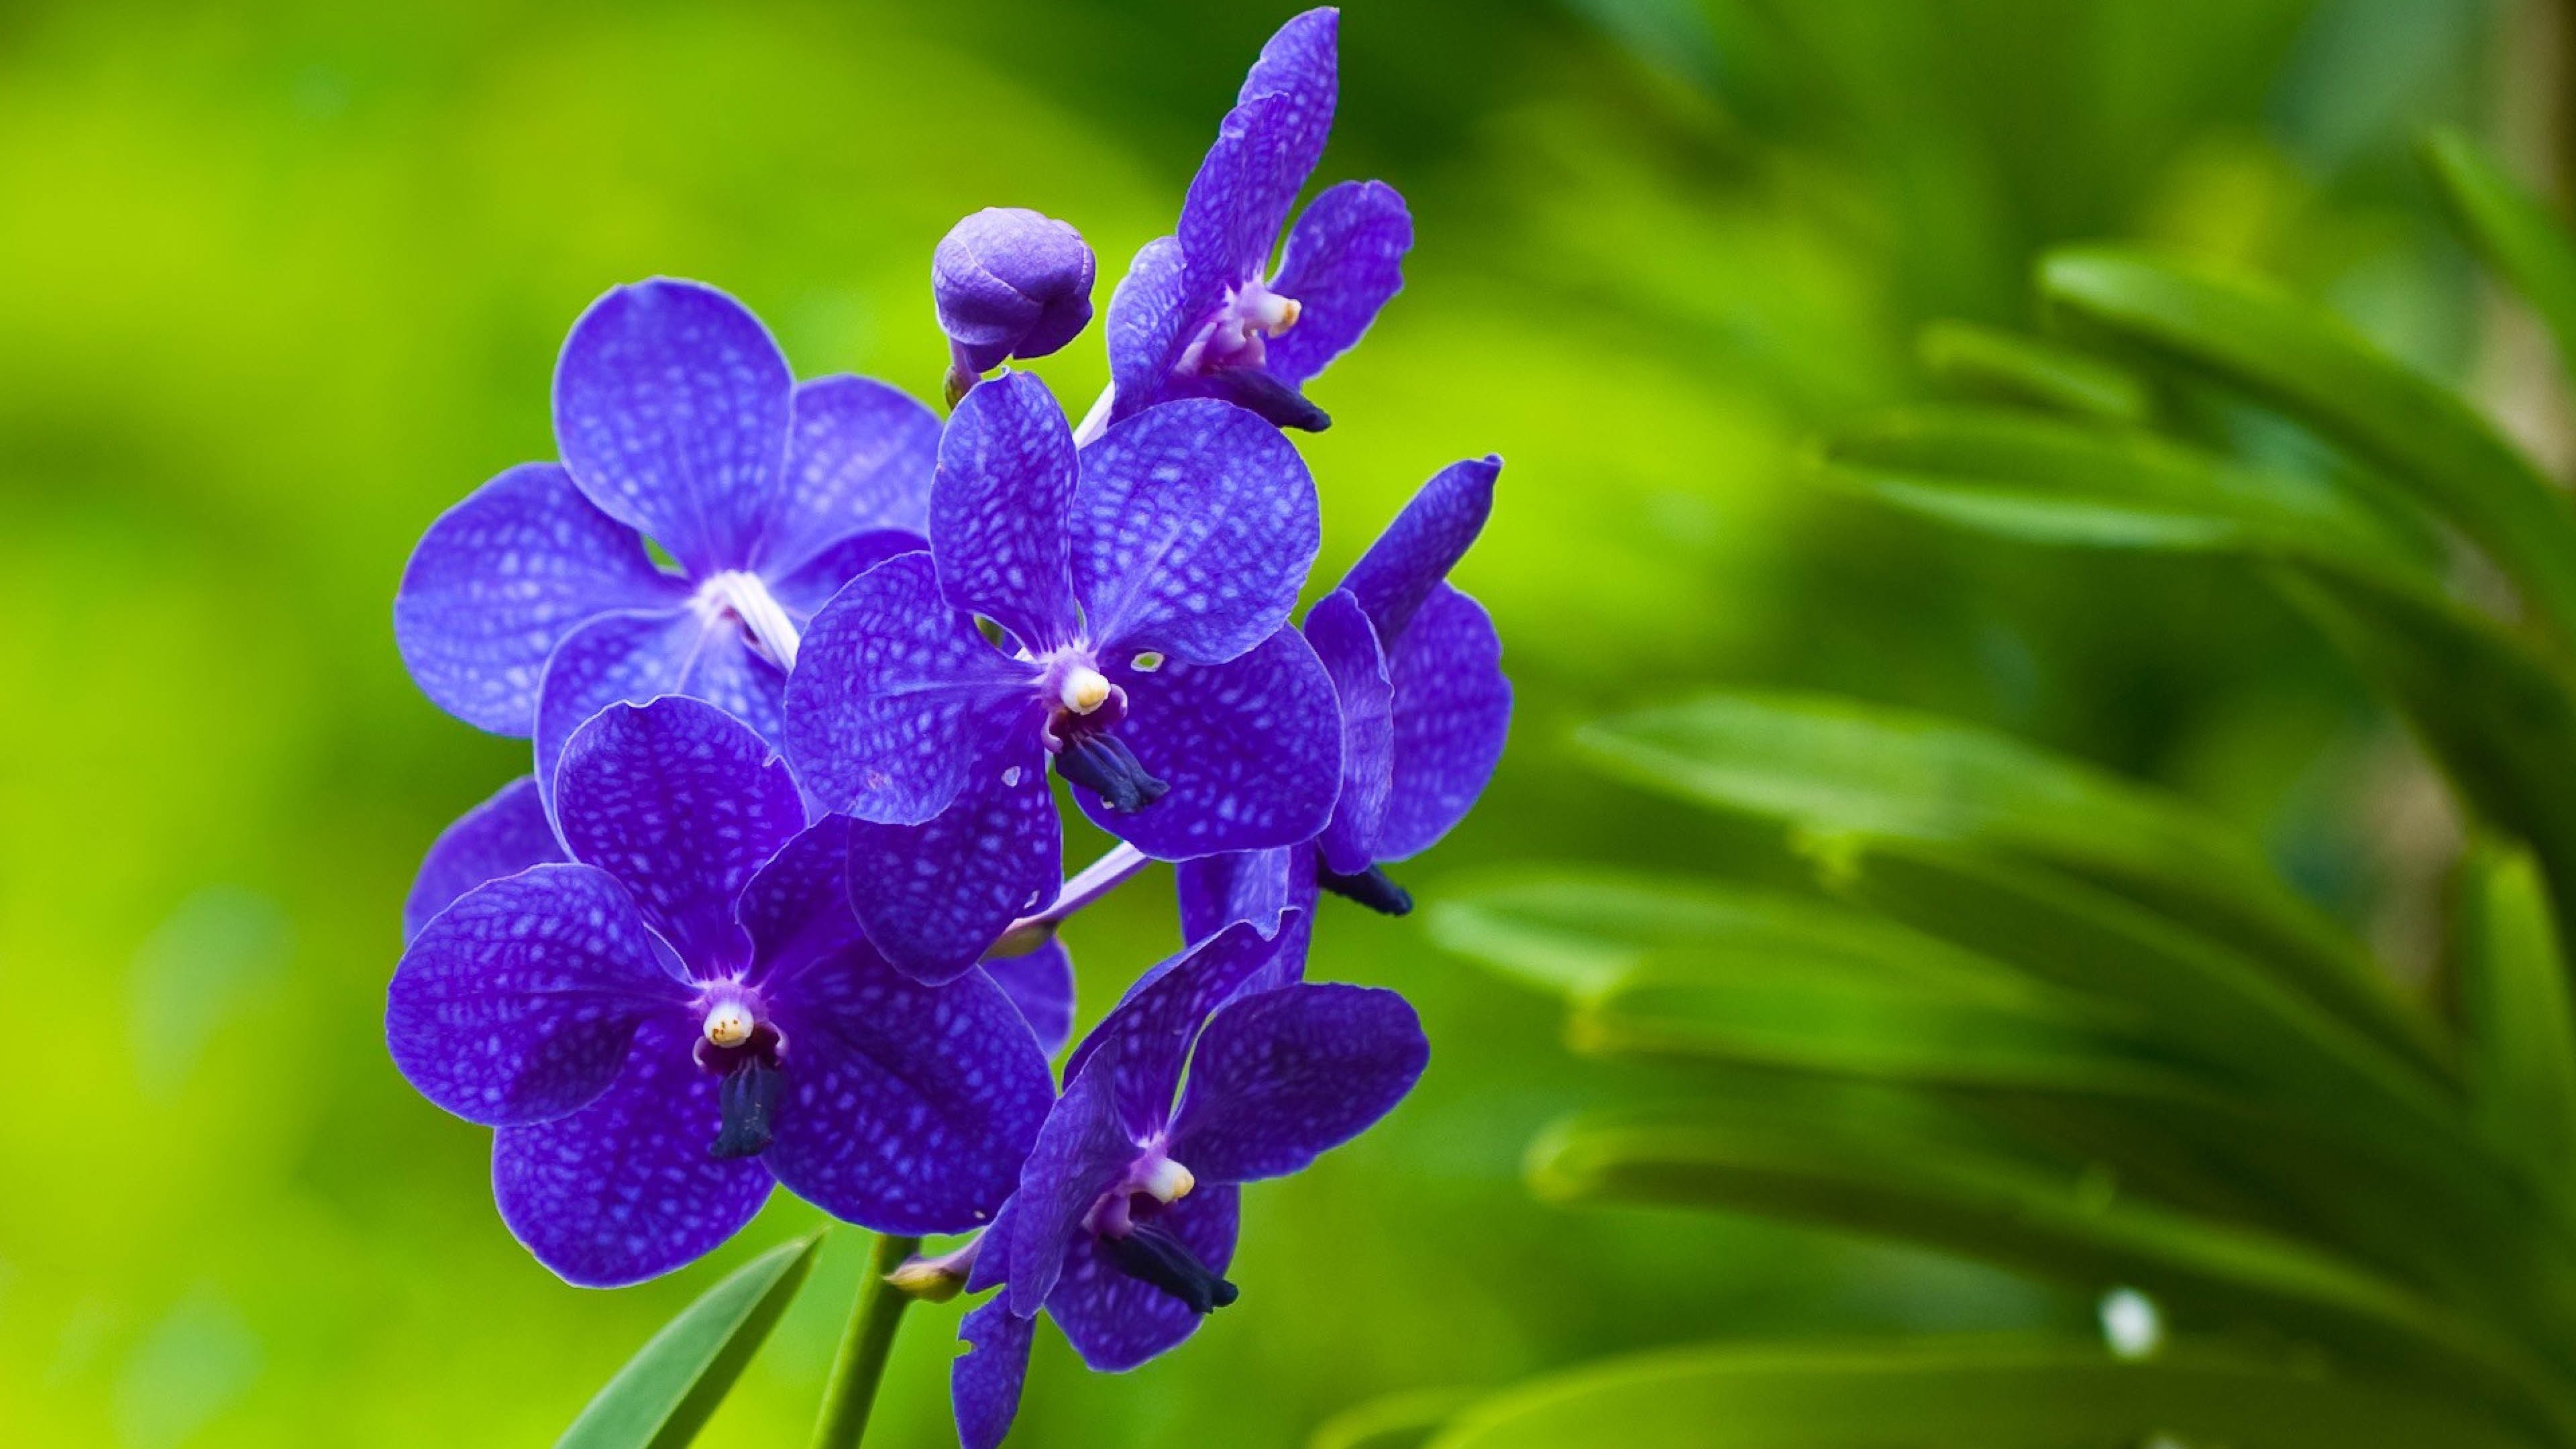 Amazing Close Up On Purple Flower Wallpaper Desktop Fond Ecran Fleur Printemps 69745 Hd Wallpaper Backgrounds Download